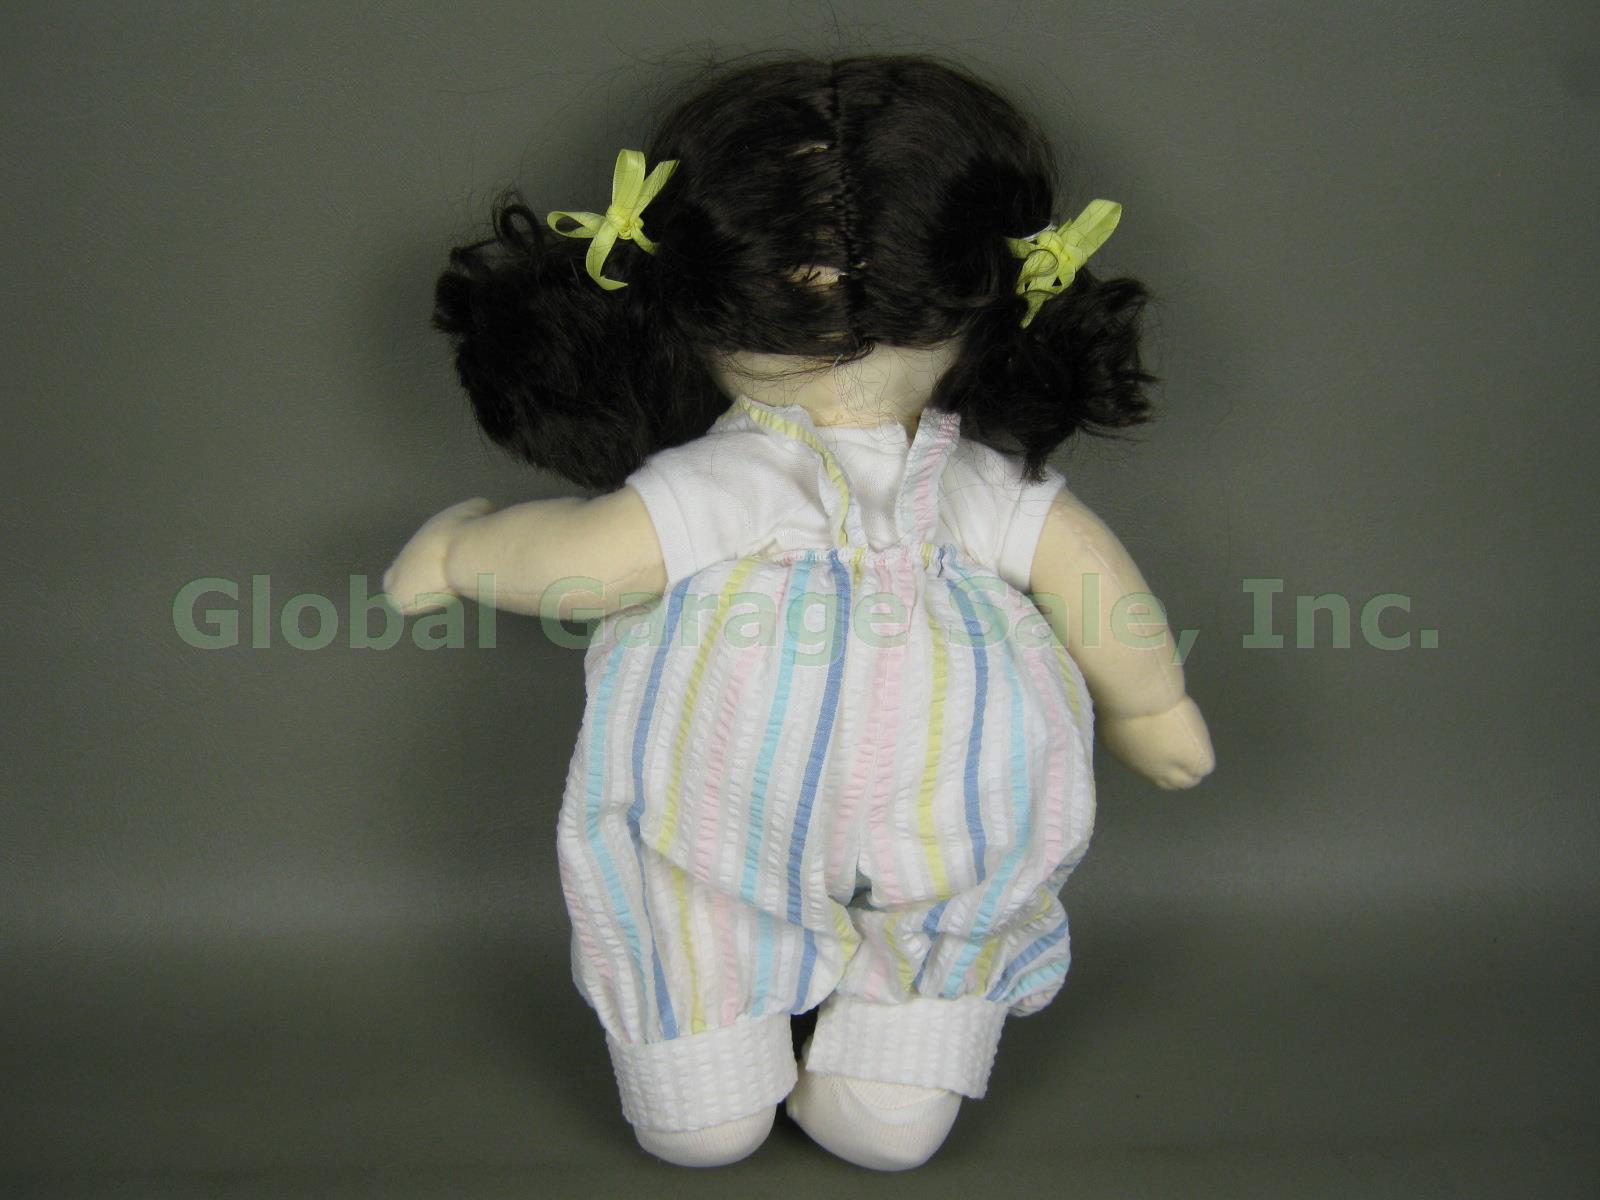 Vtg 1985 Mattel Brunette My Child Doll W/ Green Eyes Brown Hair Outfit + Book NR 4